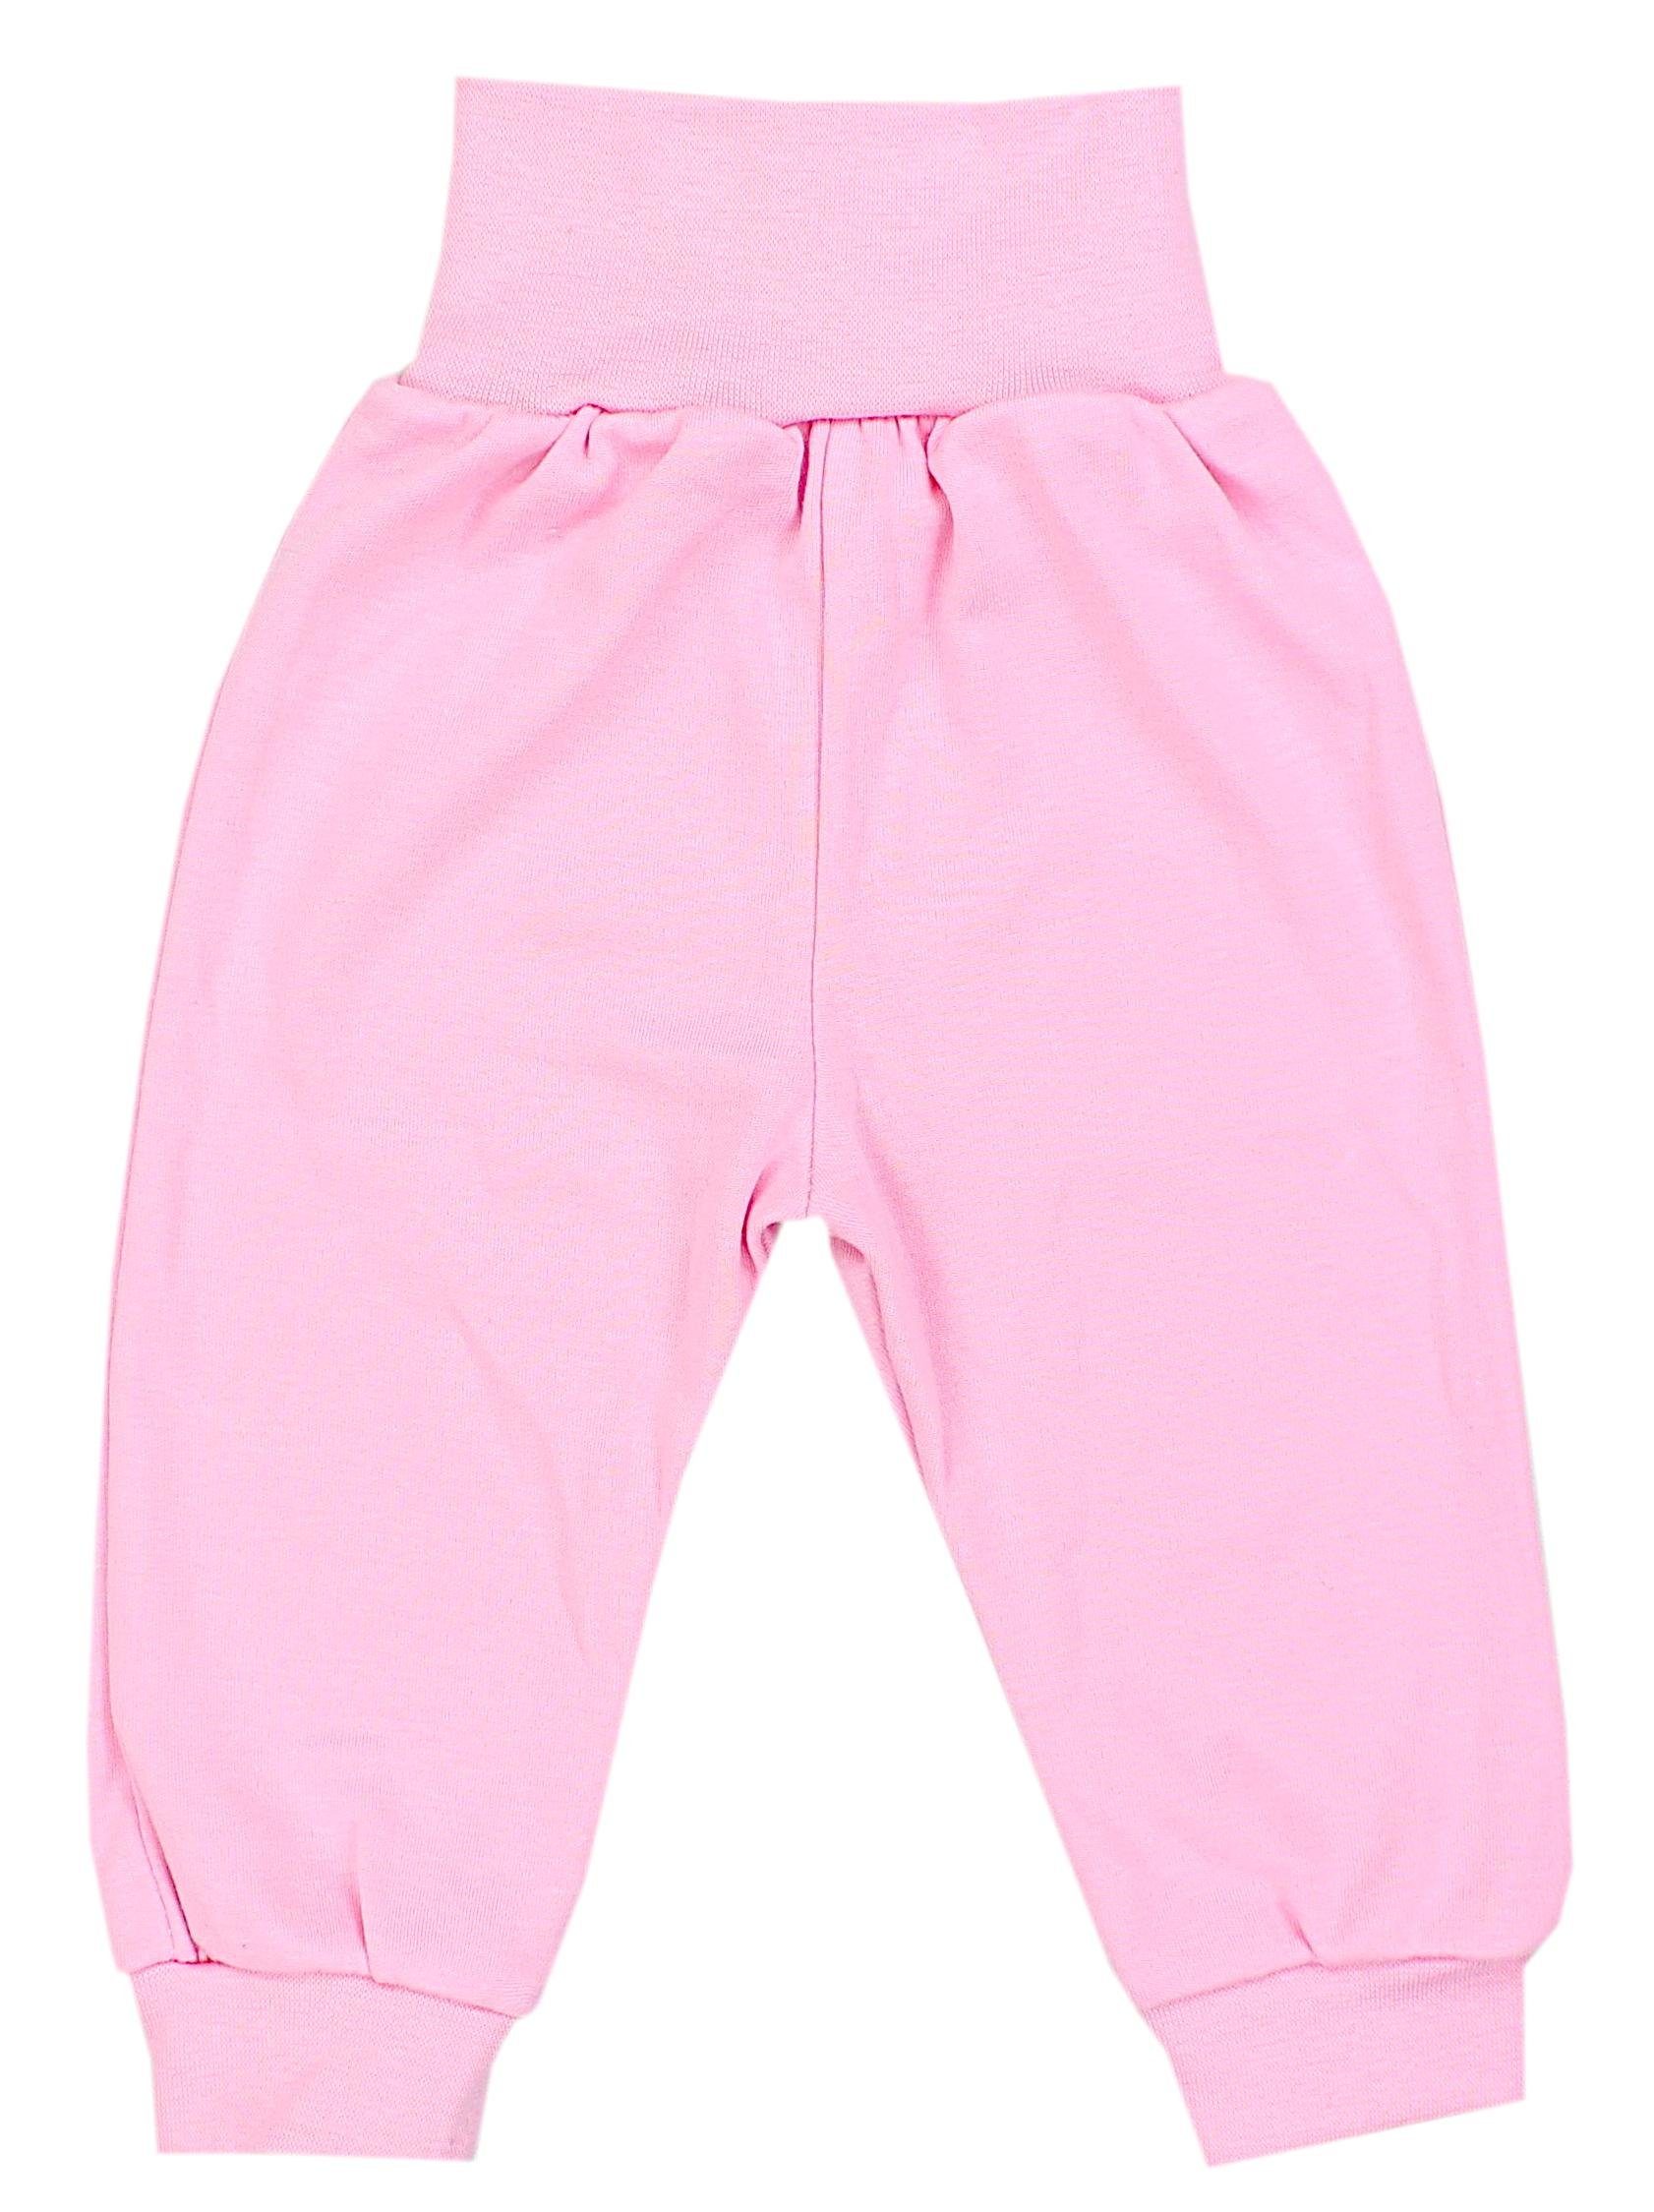 TupTam Pumphose 5er Pack unisex Graphit Pink OEKO-Tex Grau Lila Rosa Materialien Langhose aus zertifizierten